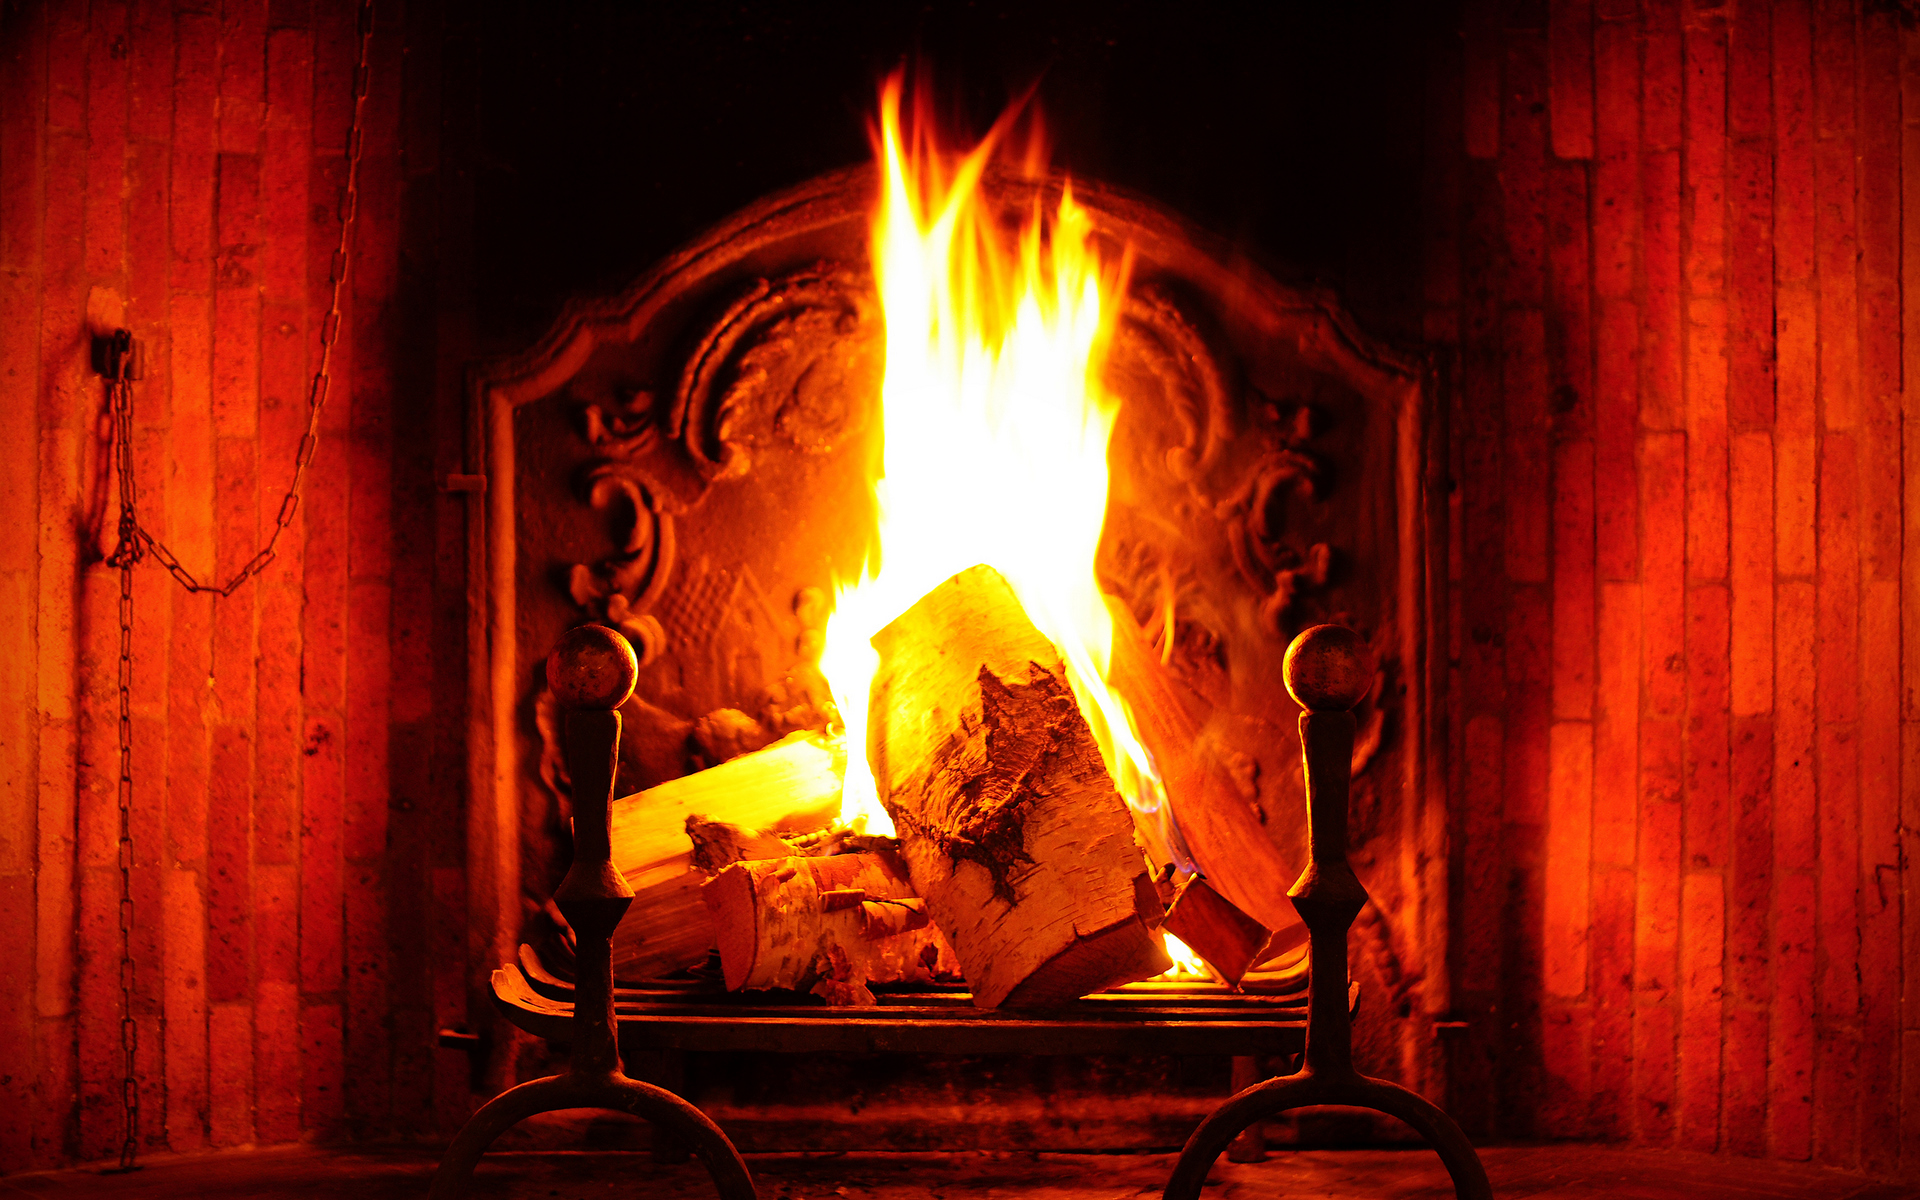 cozy fireplace scene